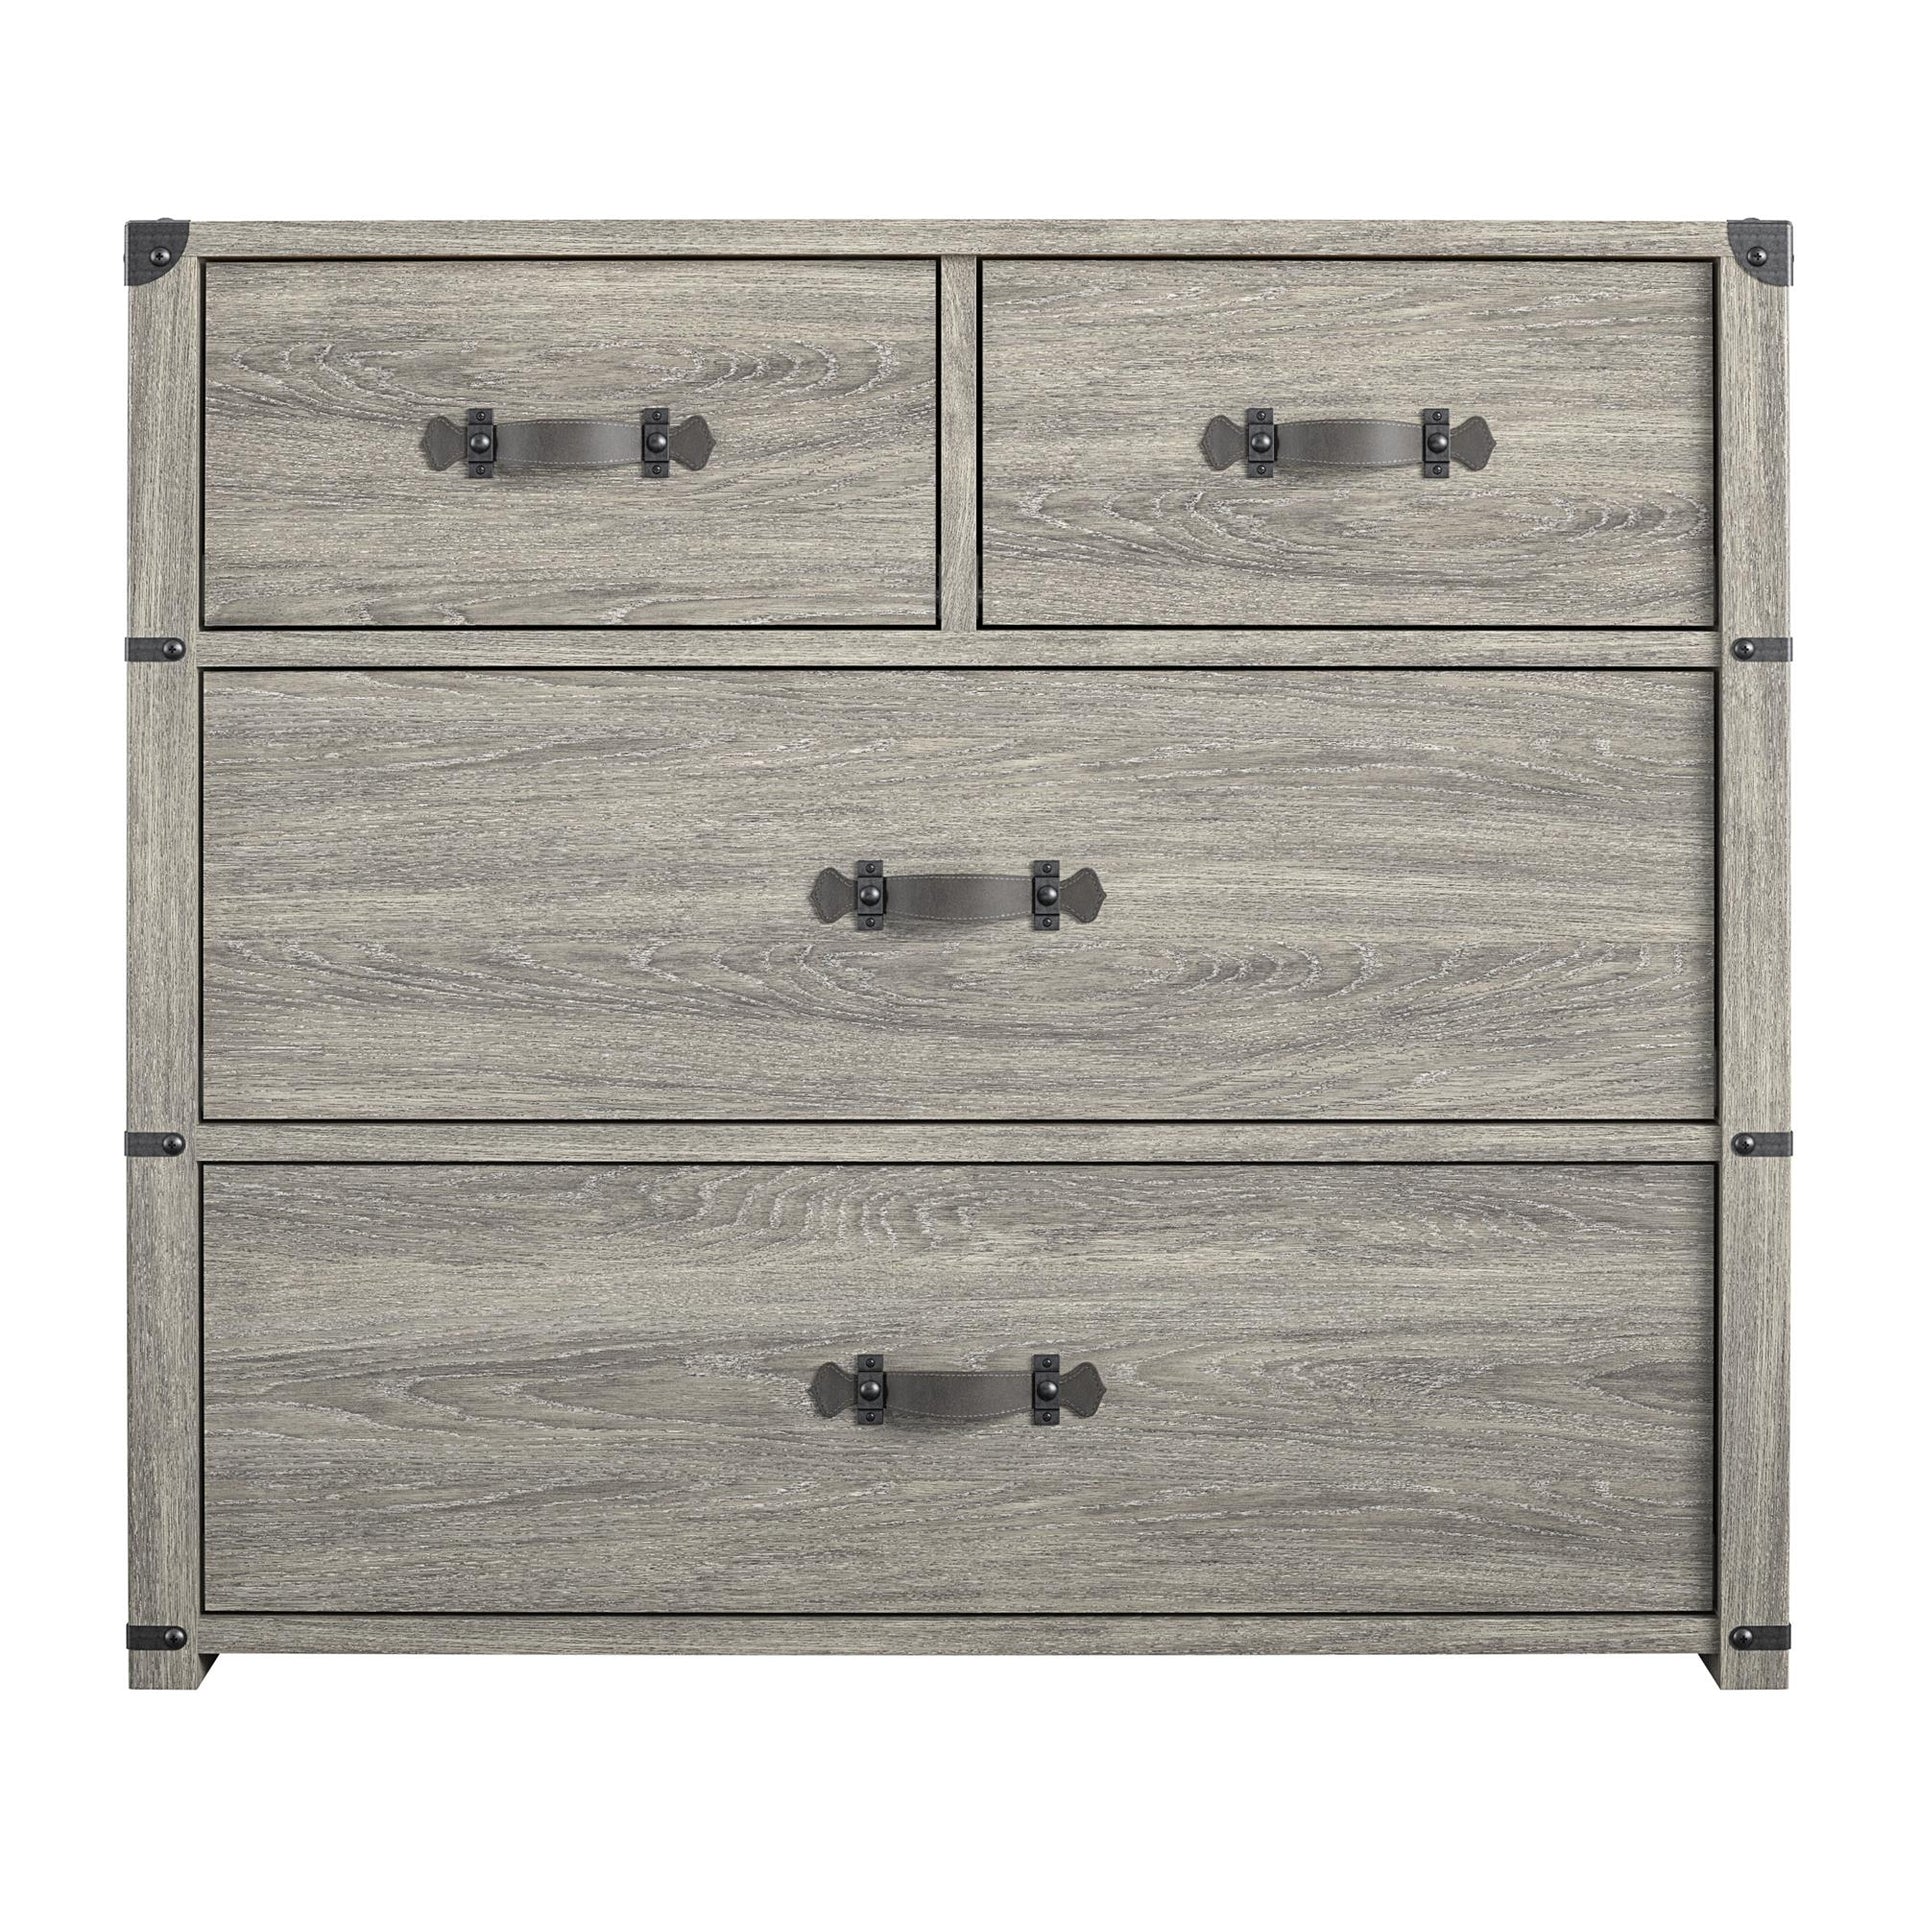 Nova 4 Drawer Storage Dresser - Gray Oak